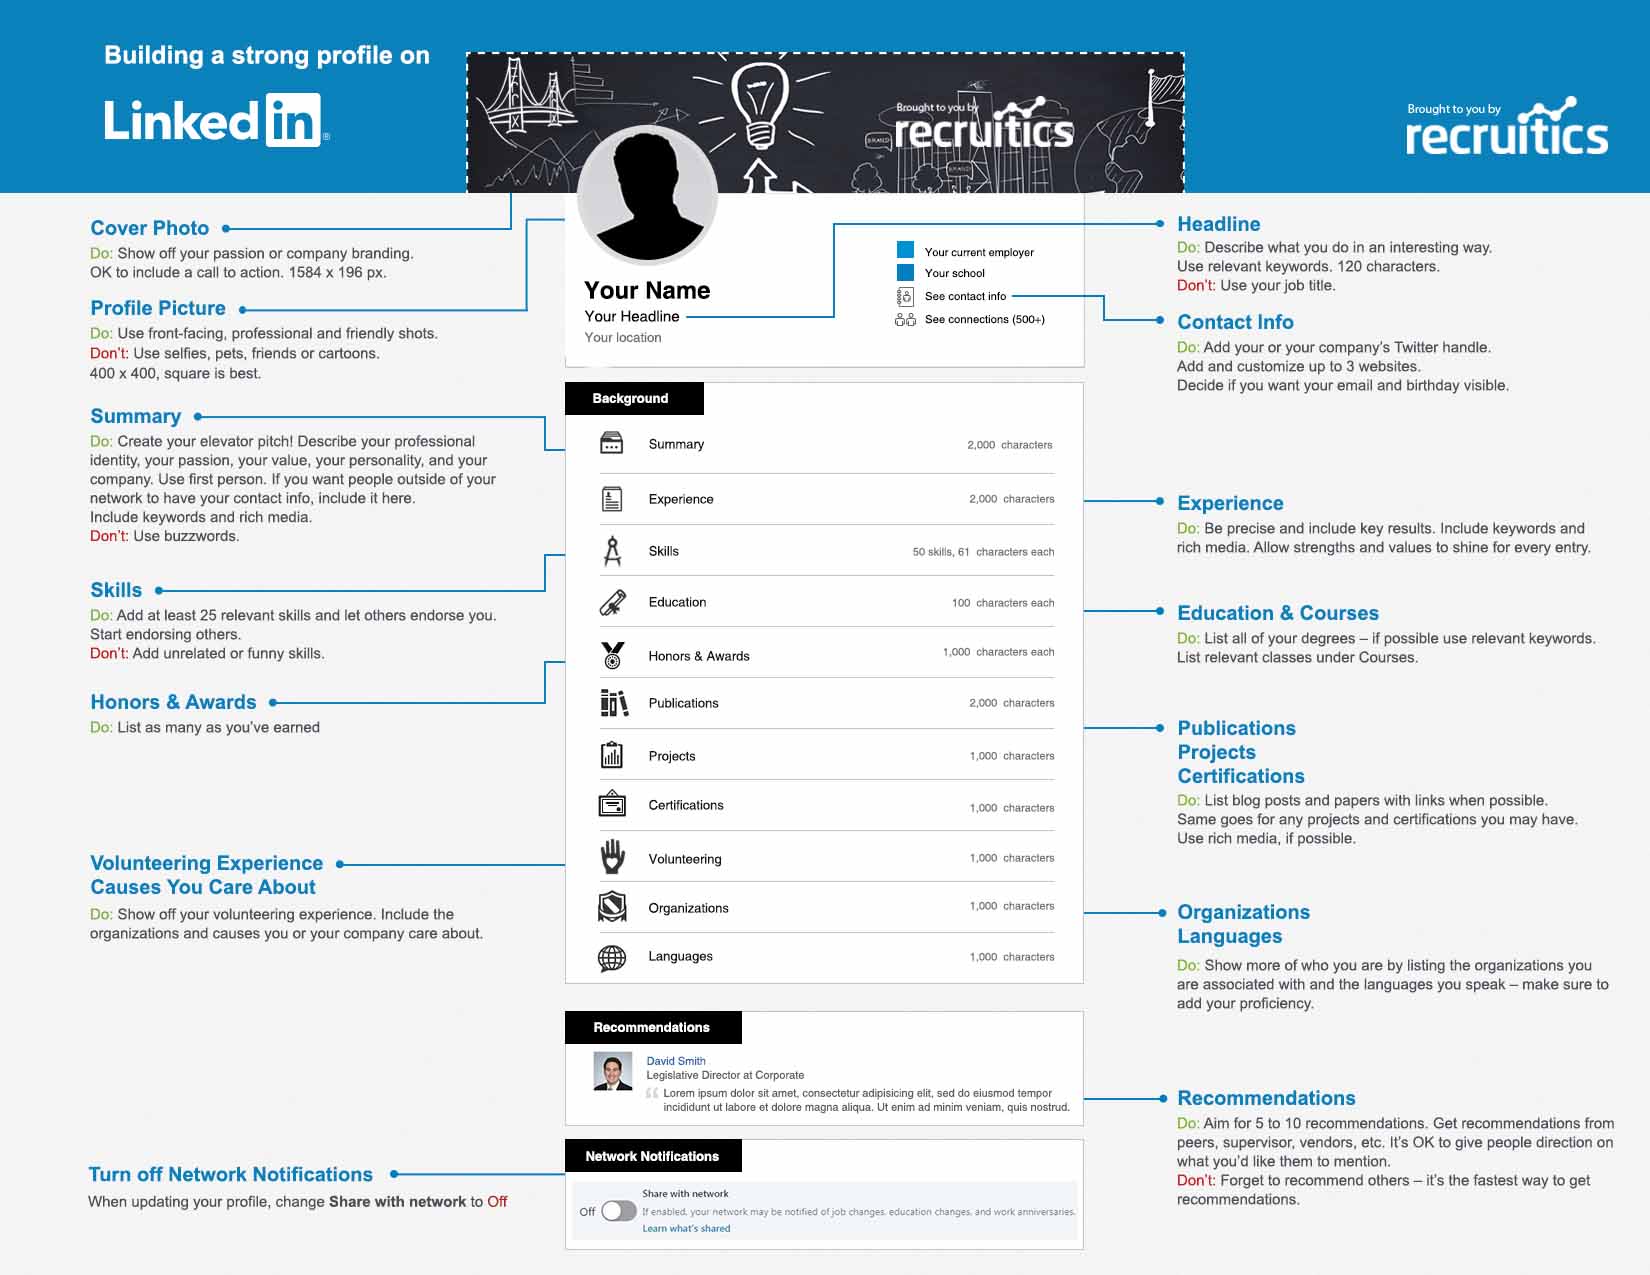 LinkedIn Personal Profile Checklist | Employer Brand Resources